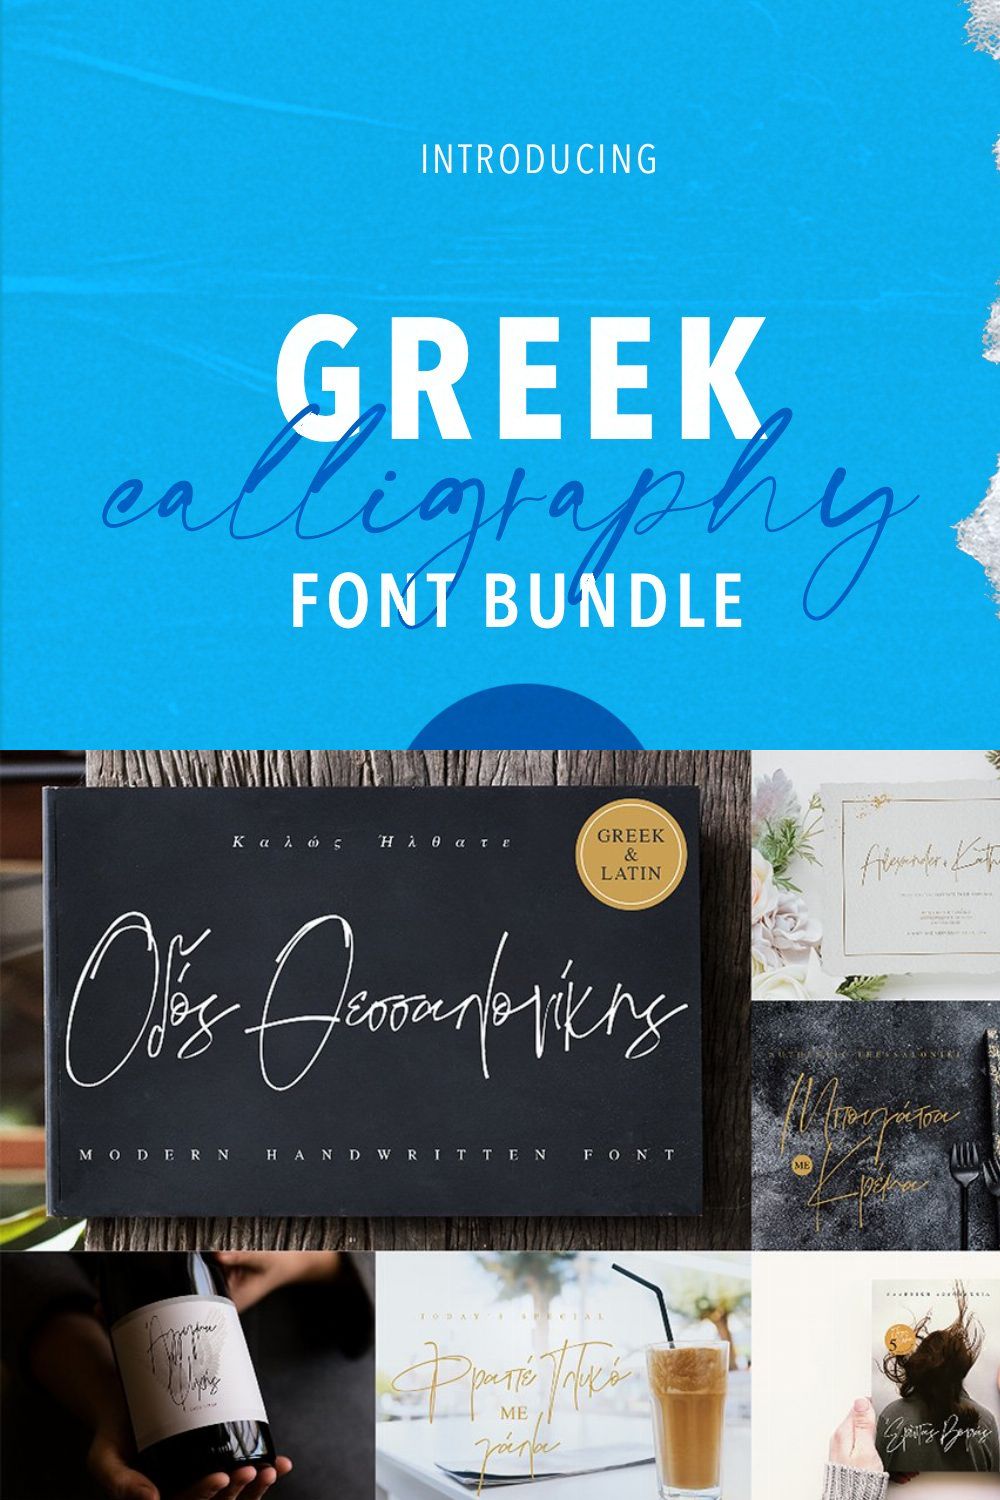 Greek calligraphy font bundle pinterest preview image.